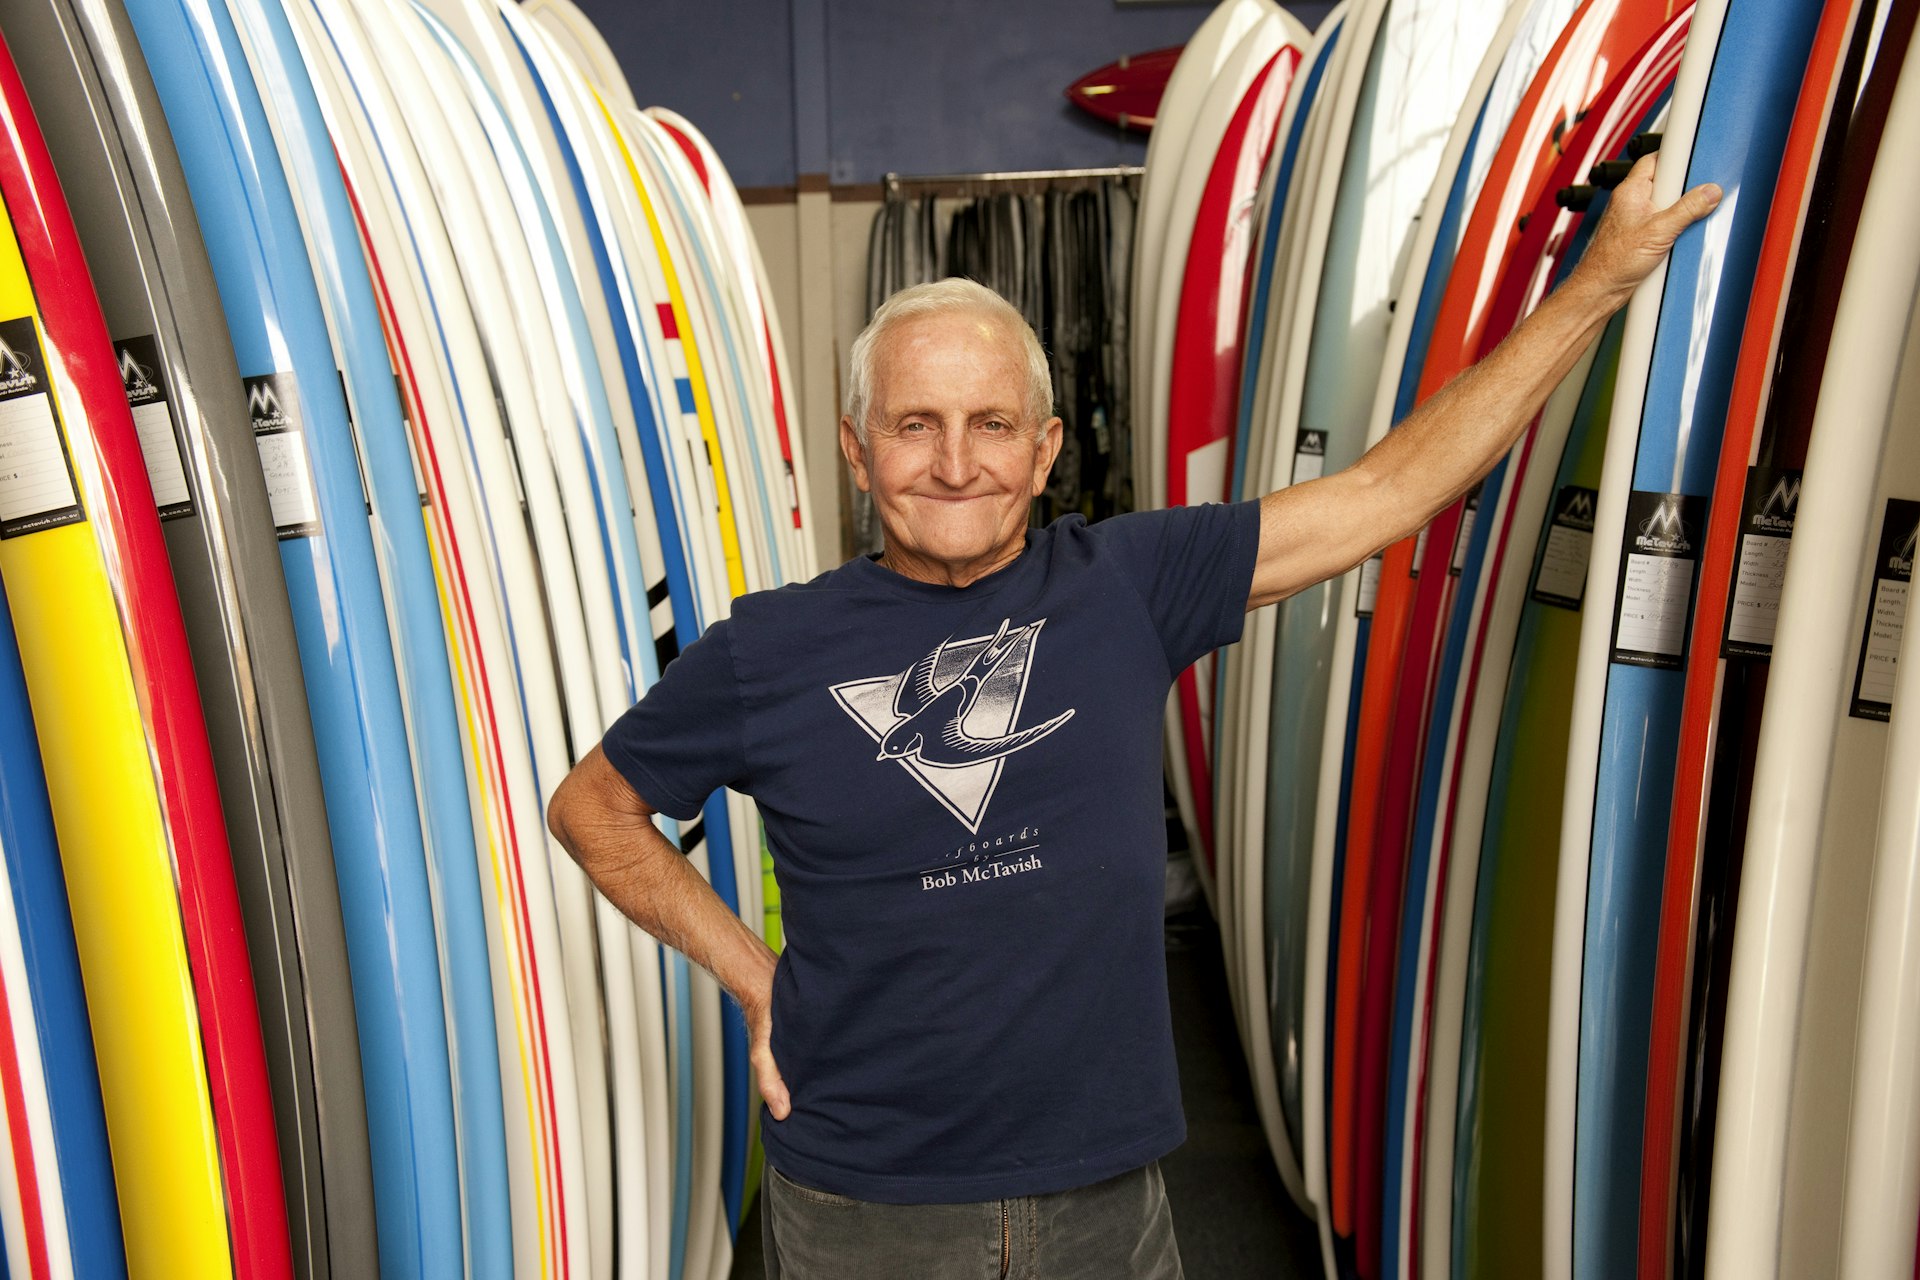 Portrait of local surf legend at his McTavish surfboard shop